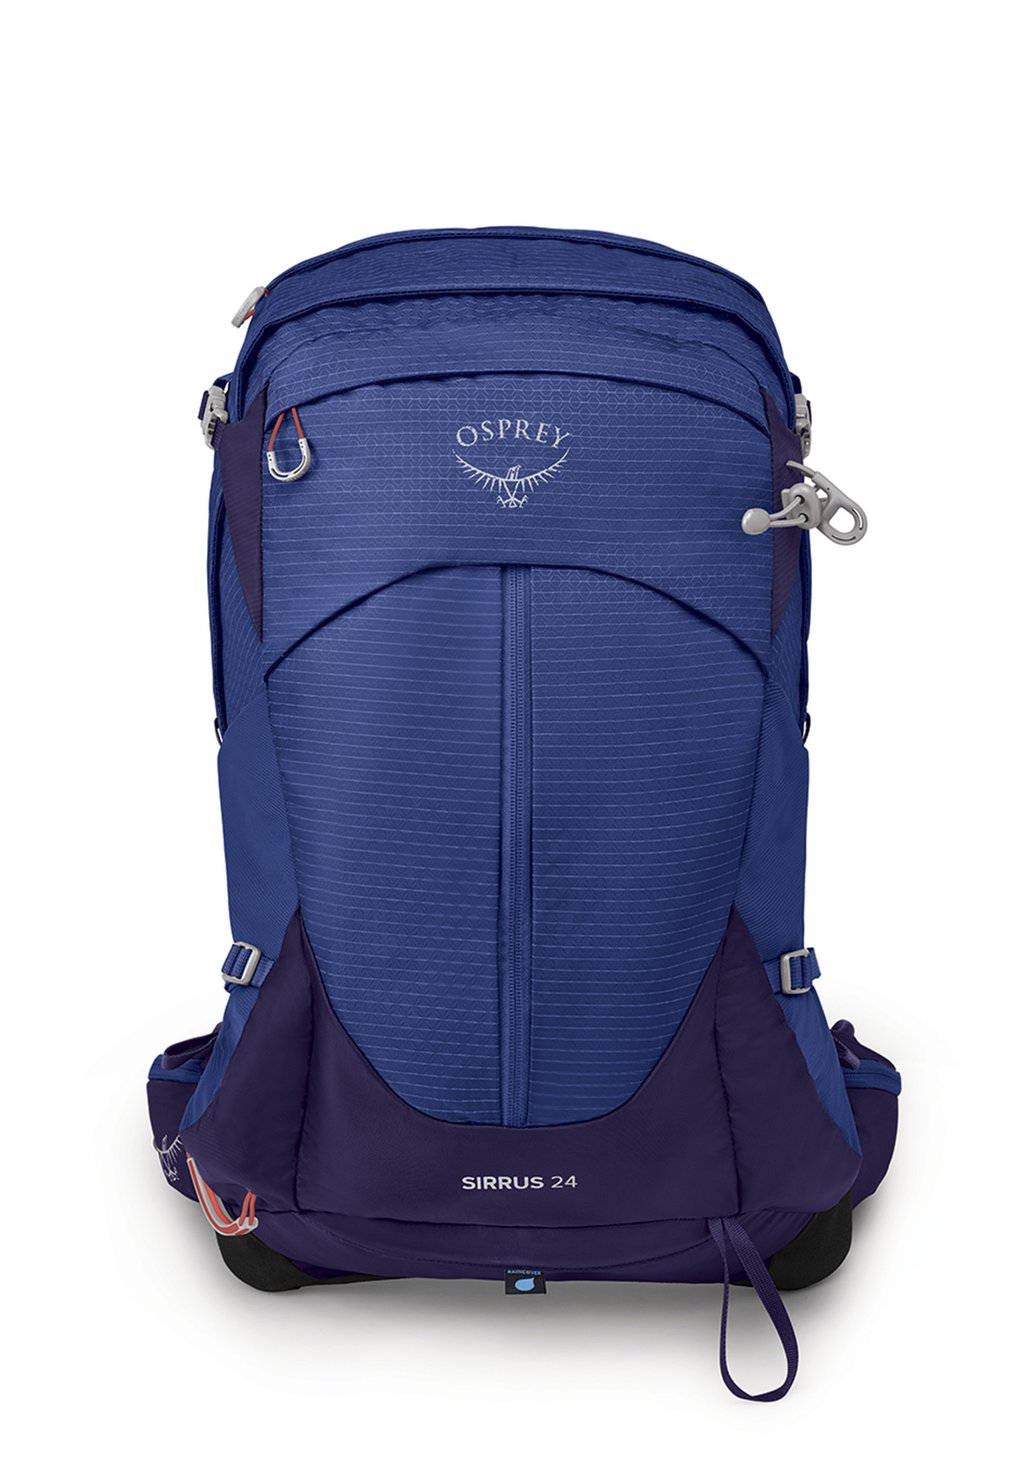 цена Туристический рюкзак SIRRUS Osprey, цвет blueberry